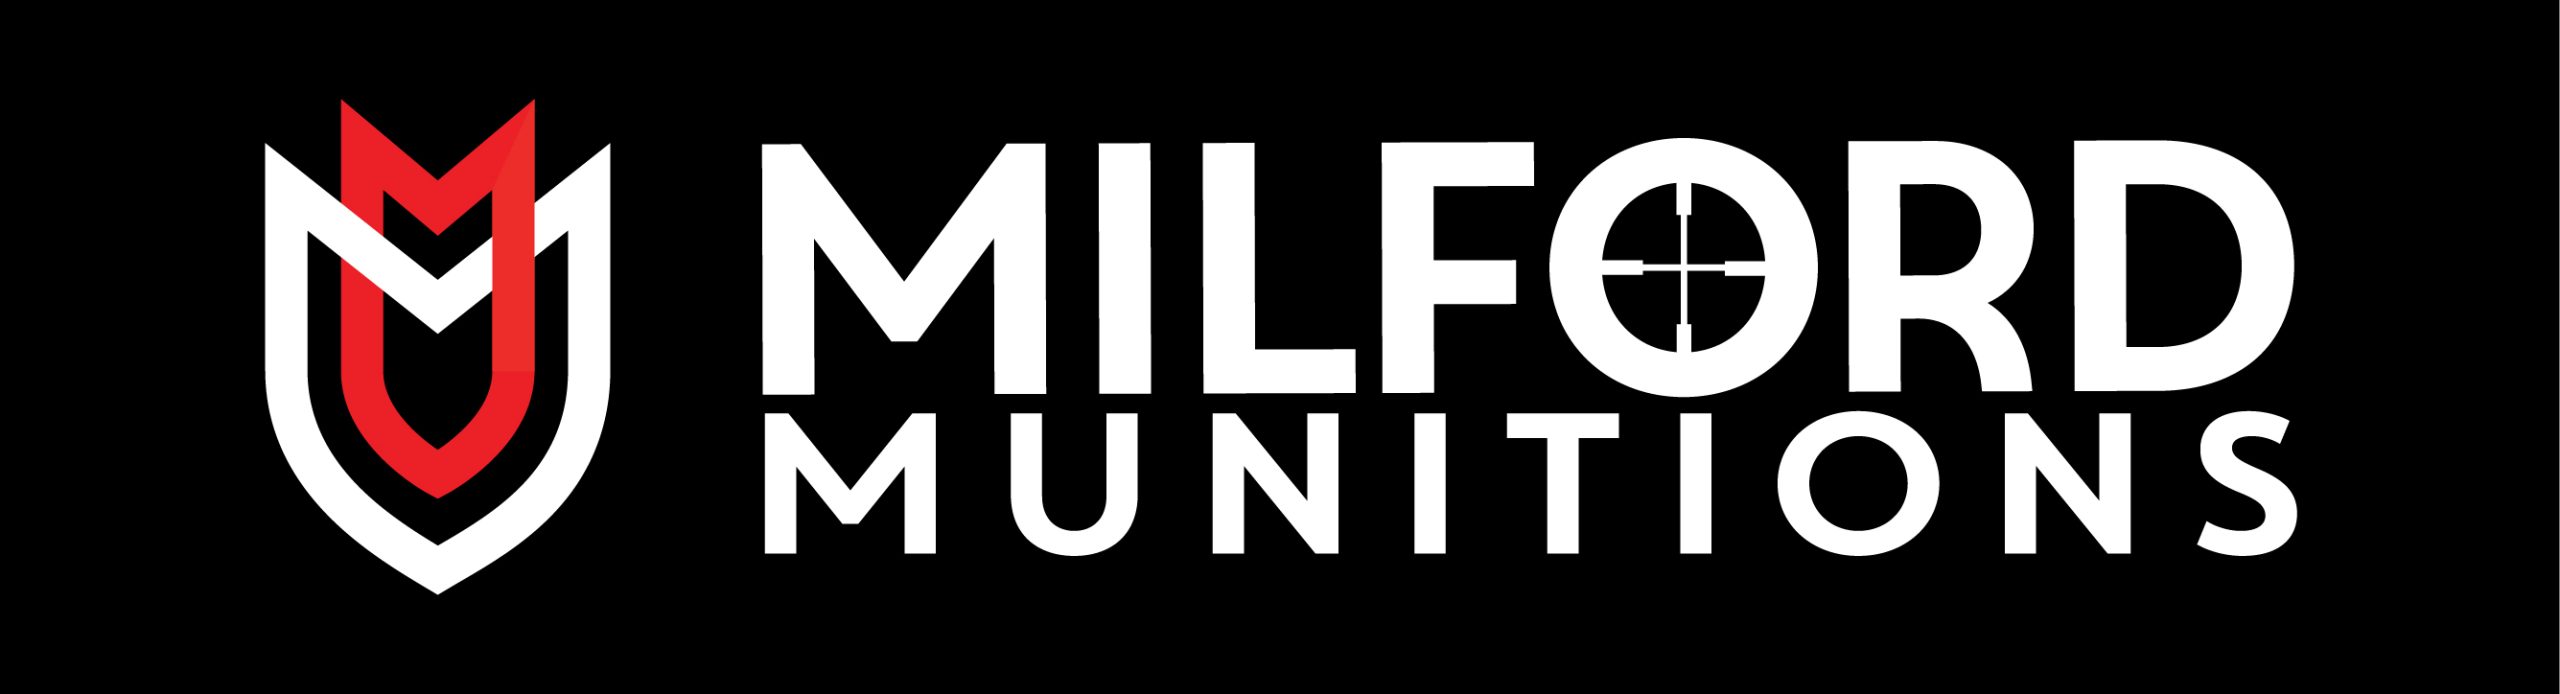 Milford Munitions